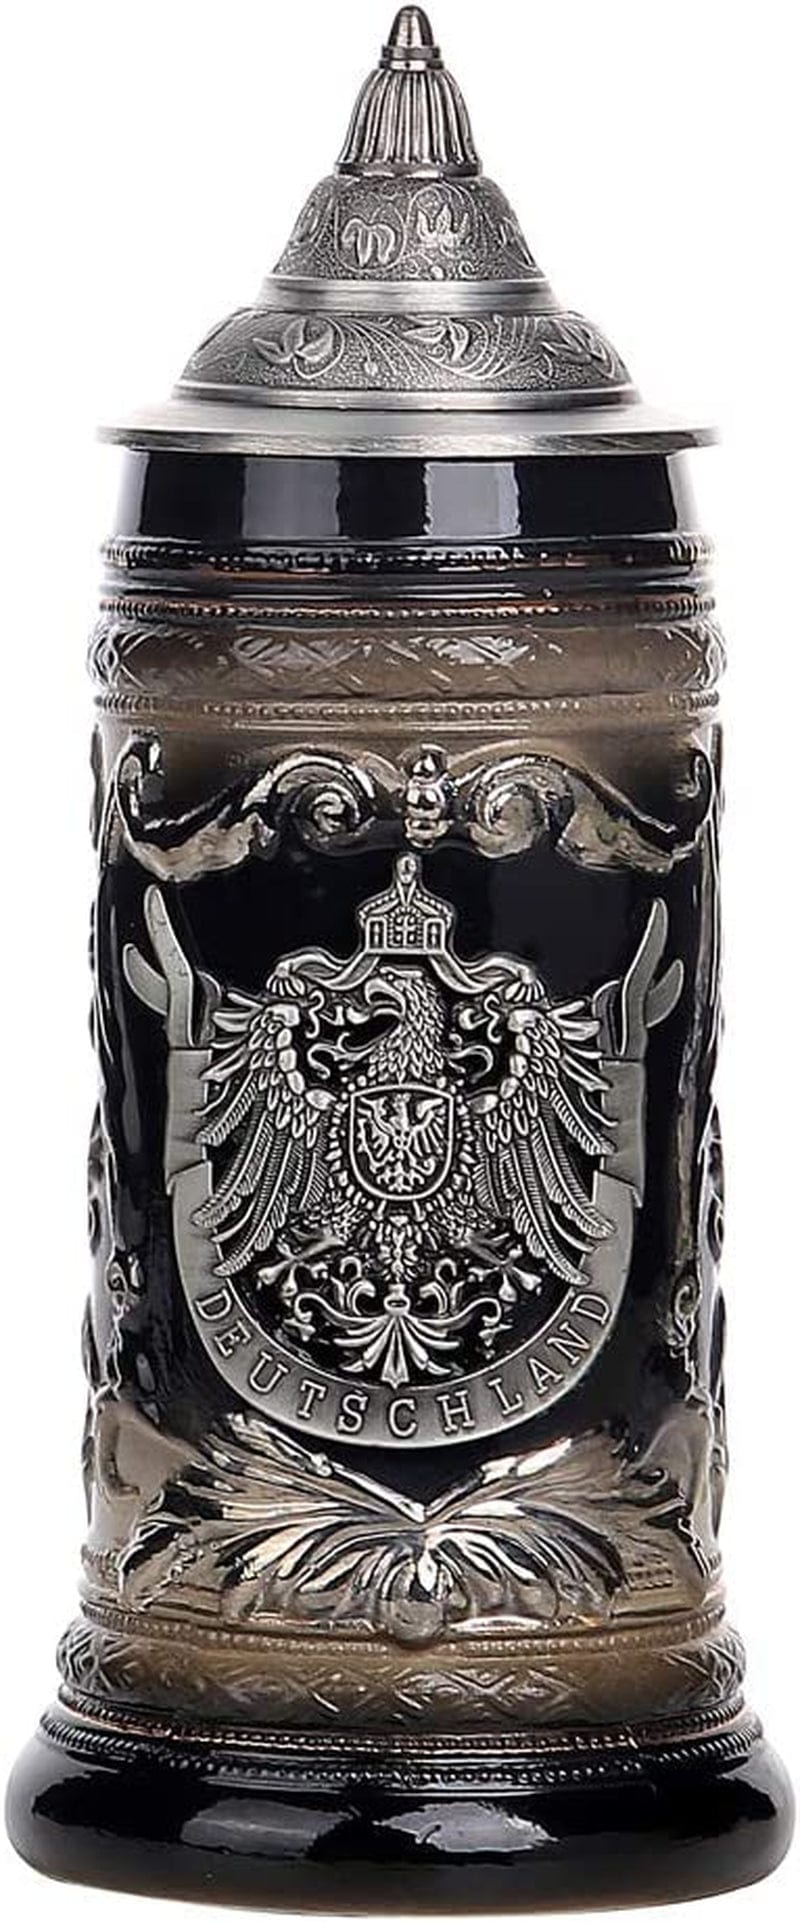 0.6 Liter Charcoal Black Ceramic Stein Beer Mug with Medieval Germany Eagle Coat of Arms on Engraved Metal Medallion